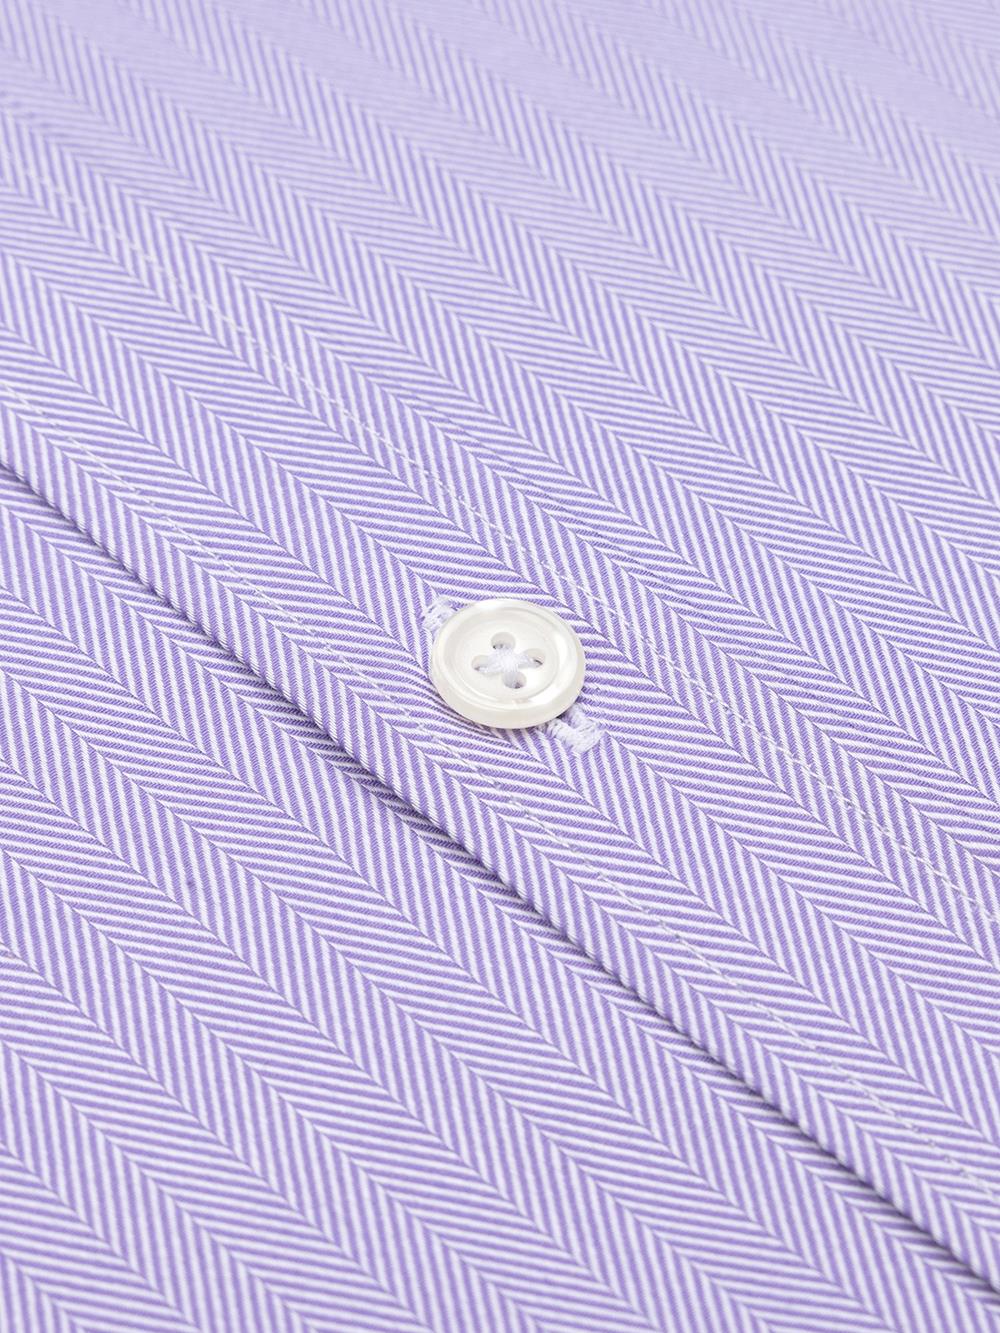 Camisa slim fit violeta de espiga